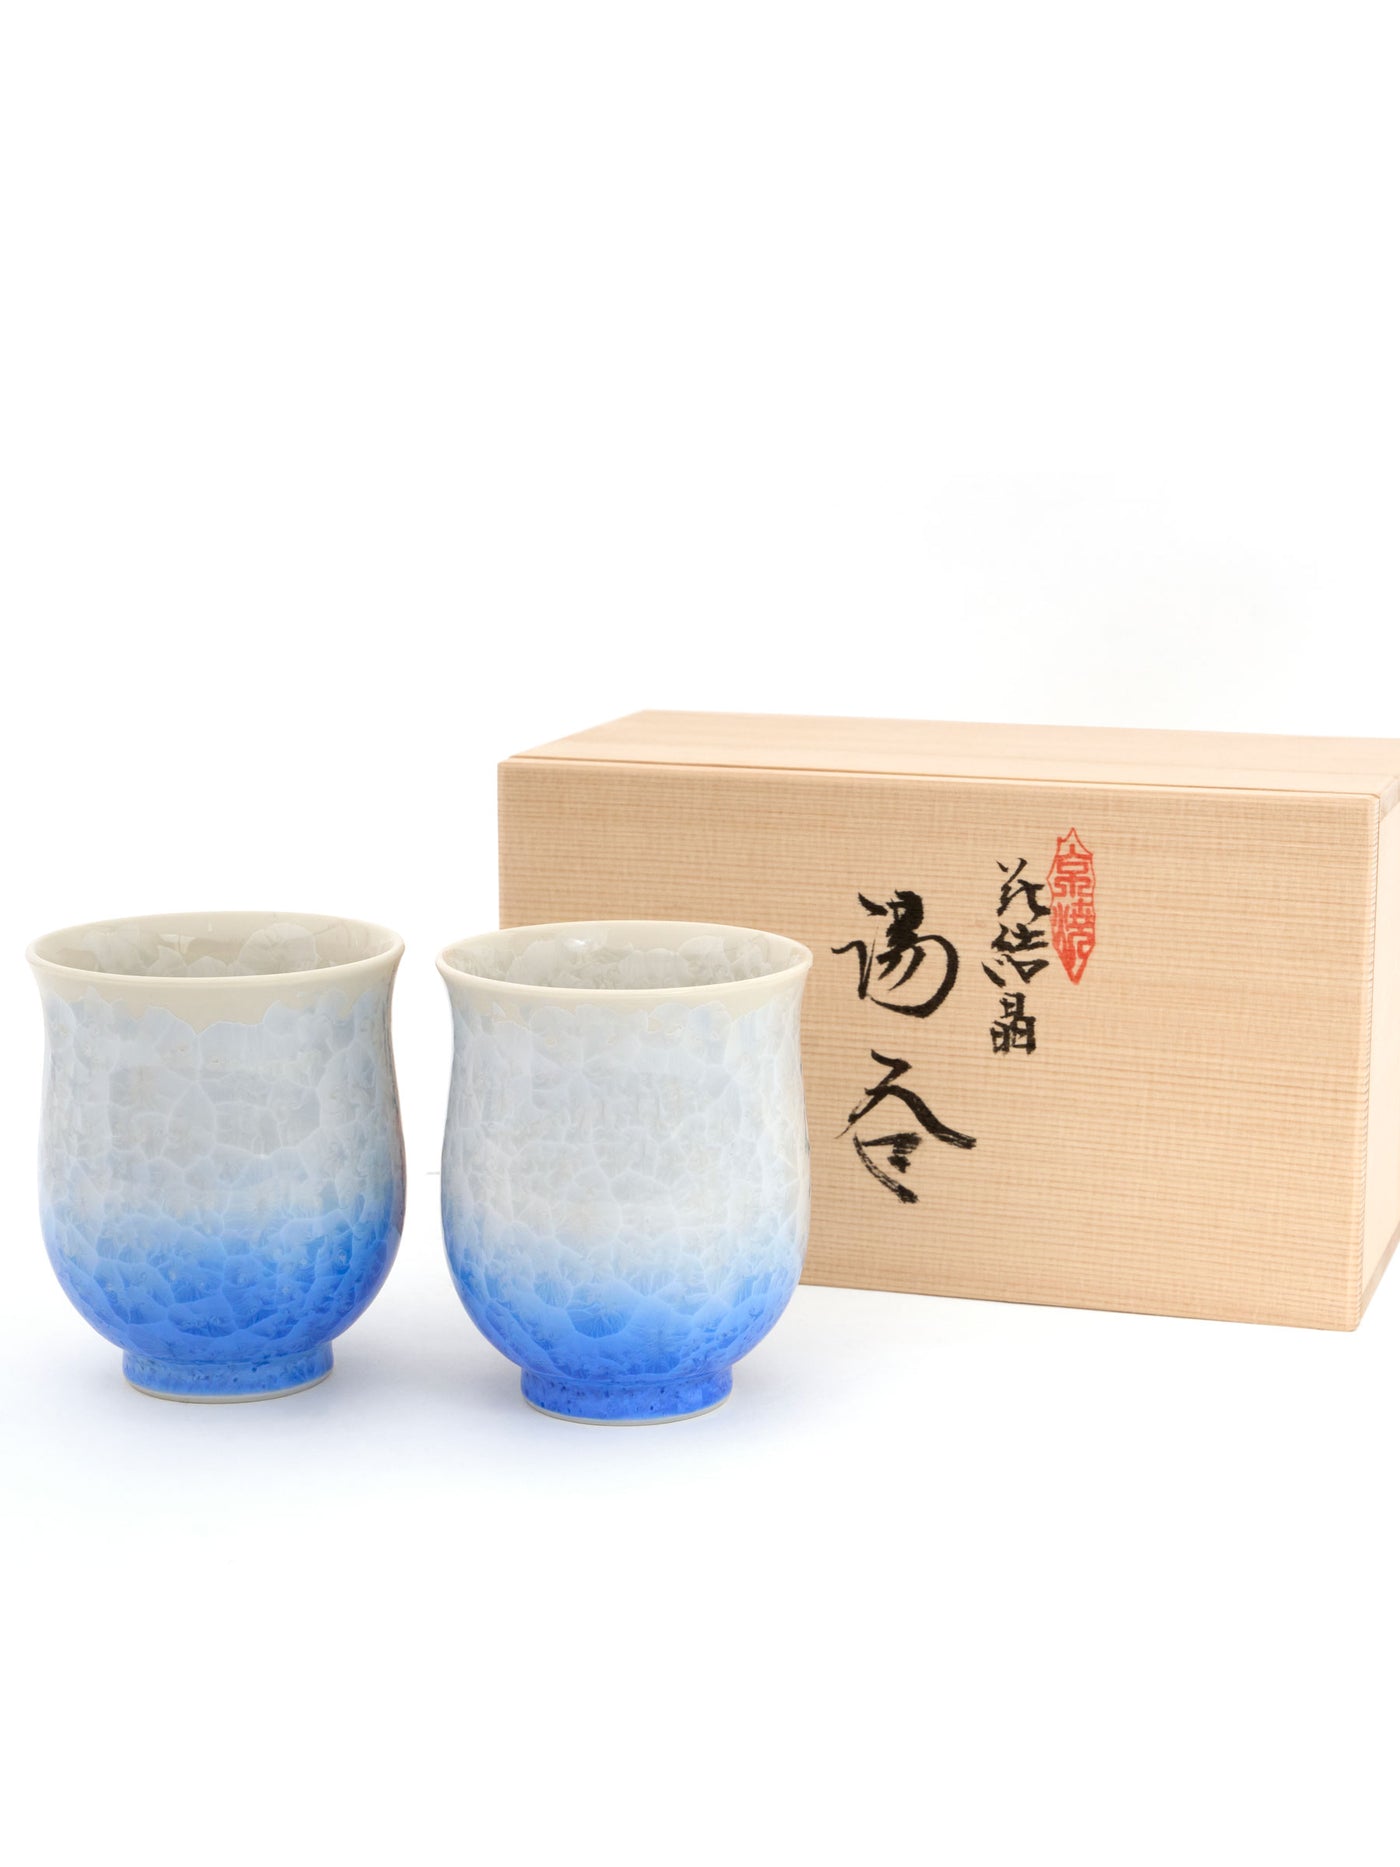 Blue Crystal Kyoto Ware Yunomi Teacup Set by Touan (7fl.oz/200ml)